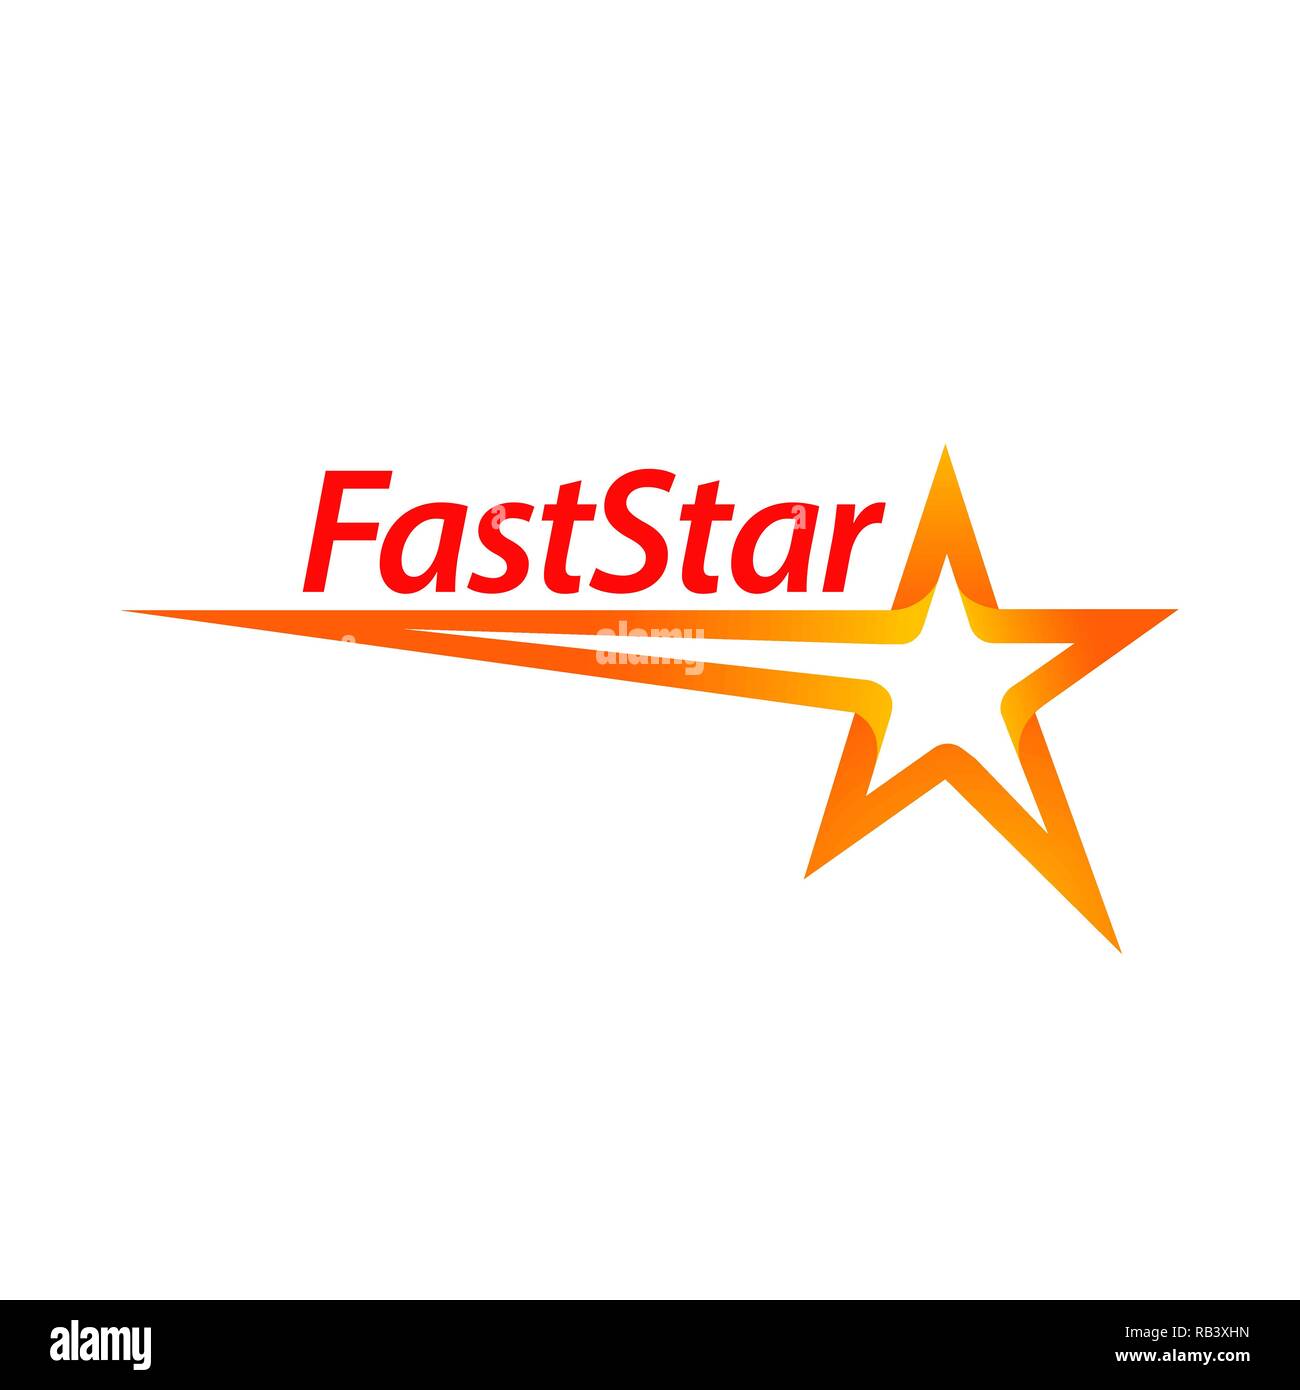 Fast star shape logo concept design template idea in orange color Stock Vector